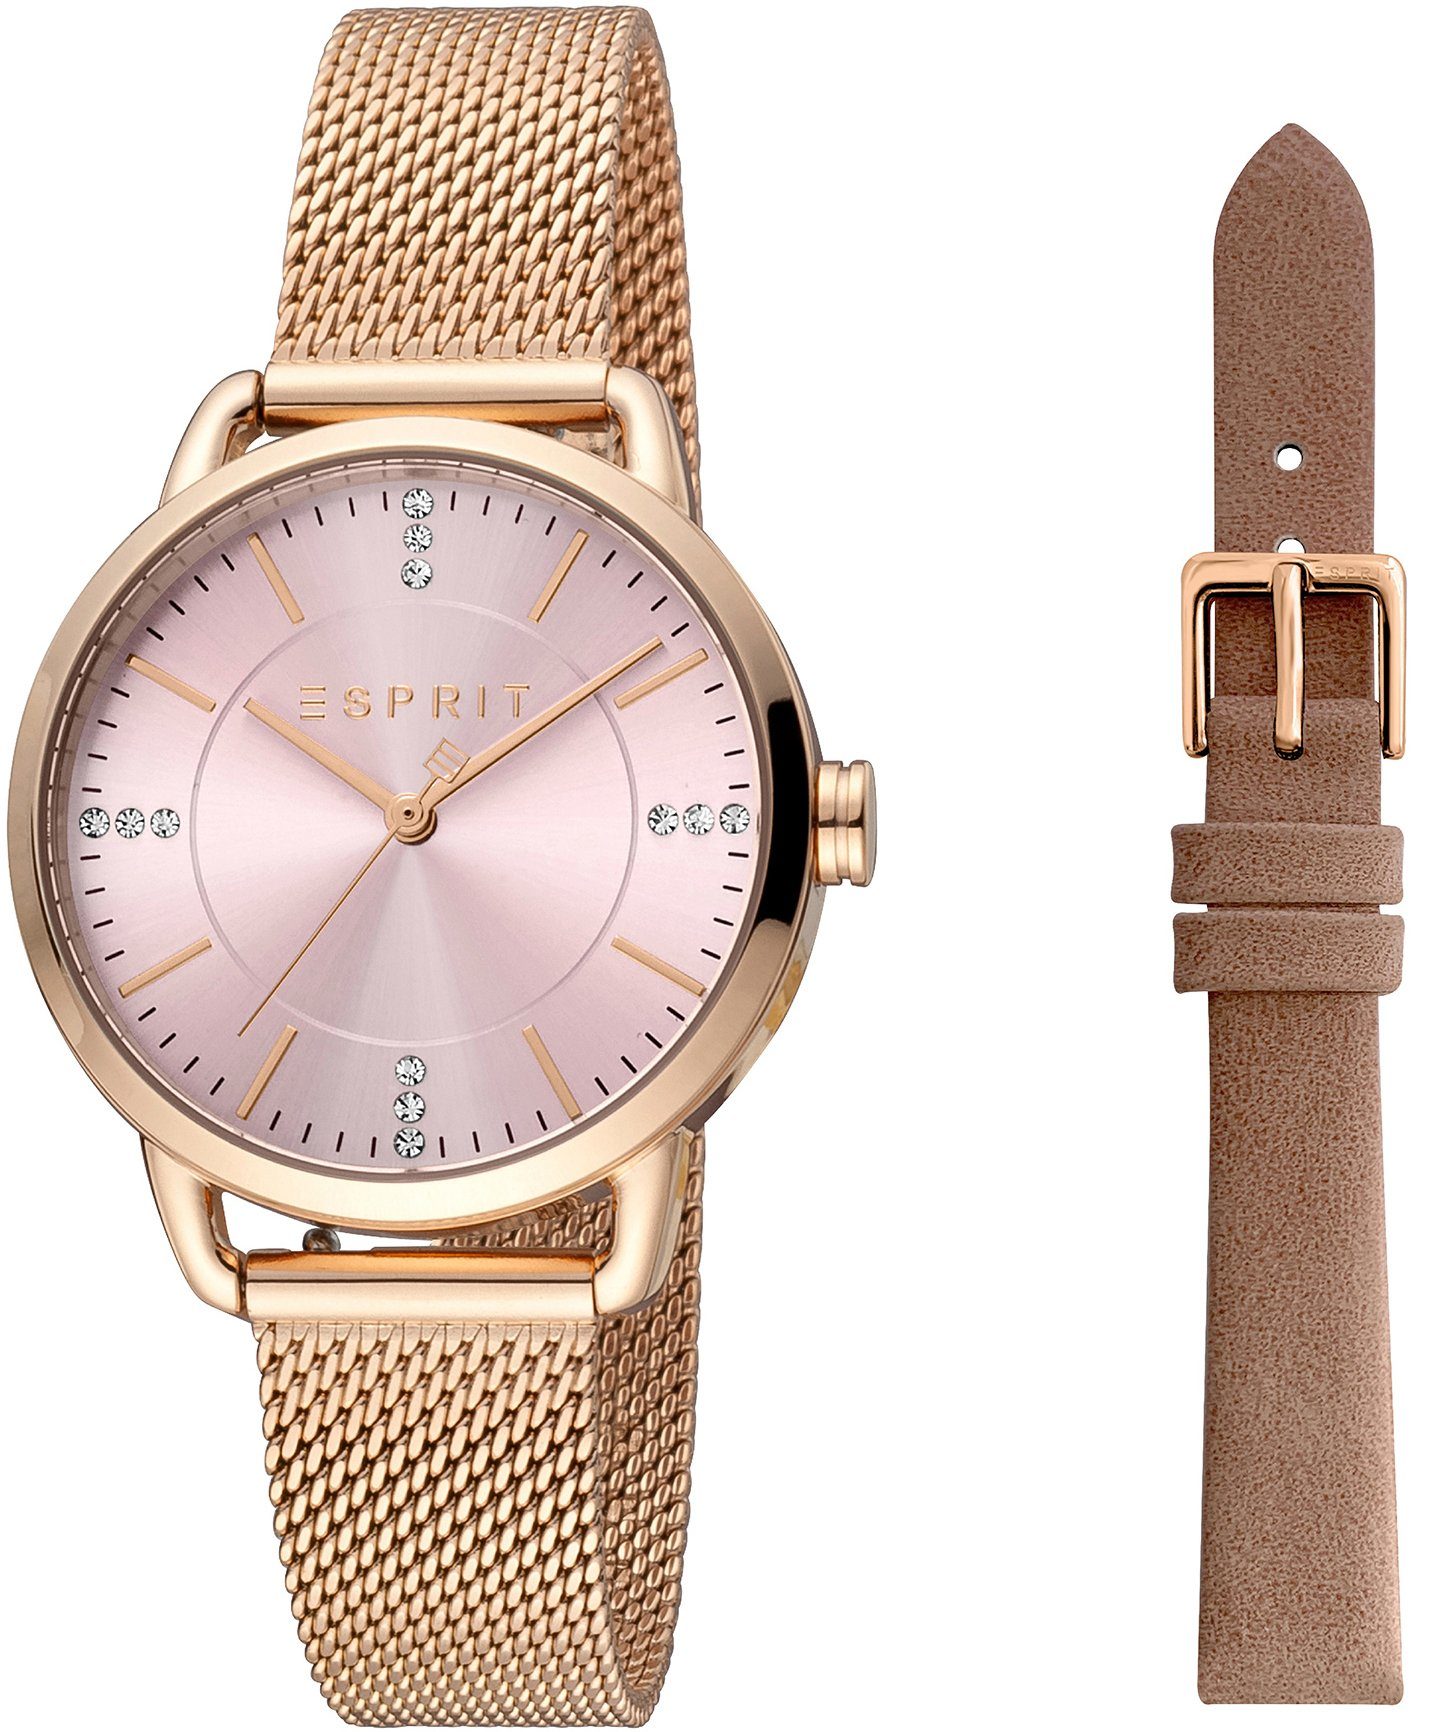 Esprit Damen Armbanduhren online kaufen | OTTO